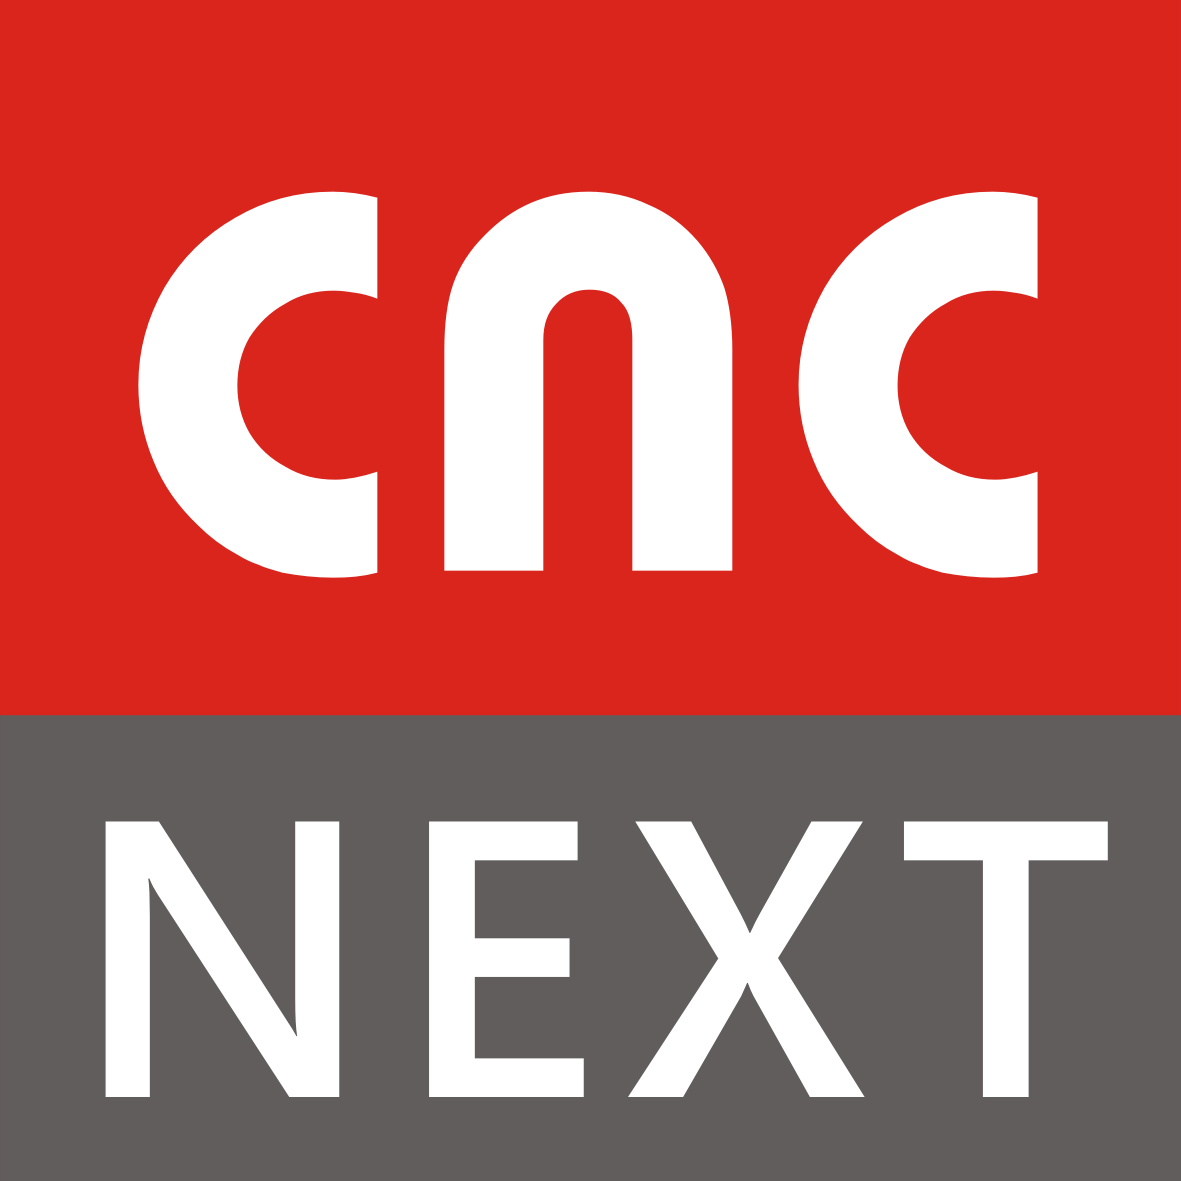 cnc glass logo